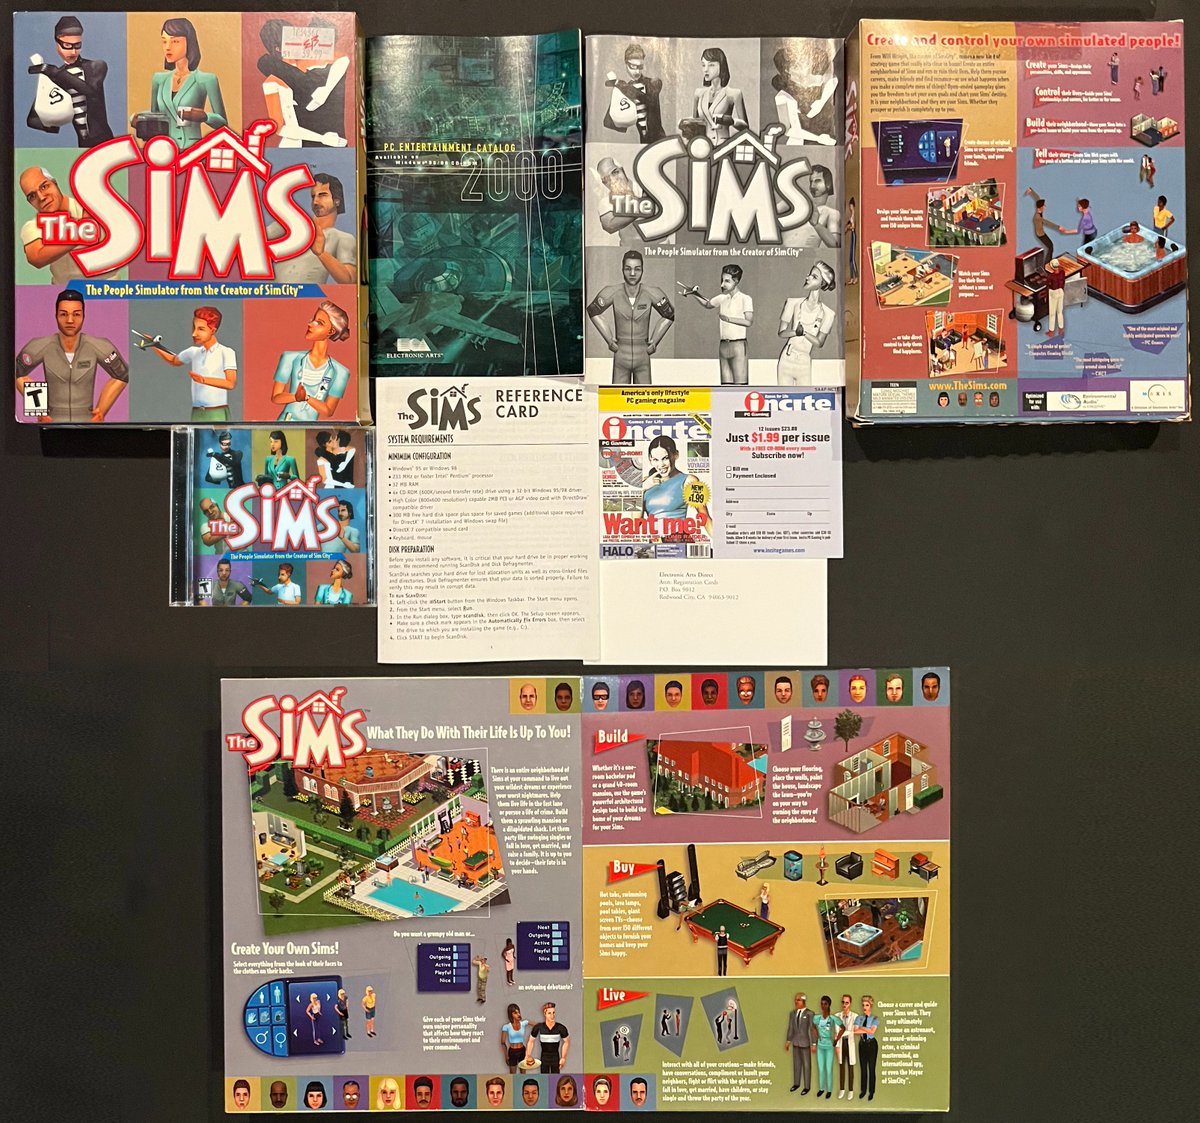 The Sims / Maxis-EA 2000

#RETROGAMING #Atari #retrocomputing #pcgames #DOSGAMING #bigboxPCgames #pointandclick #adventuregame #adventuregames #rpg #ultima #pixelart  #sims #thesims #rtsgames #ultima #lucasarts #sierragames #starcraft #blizzard  #maxis